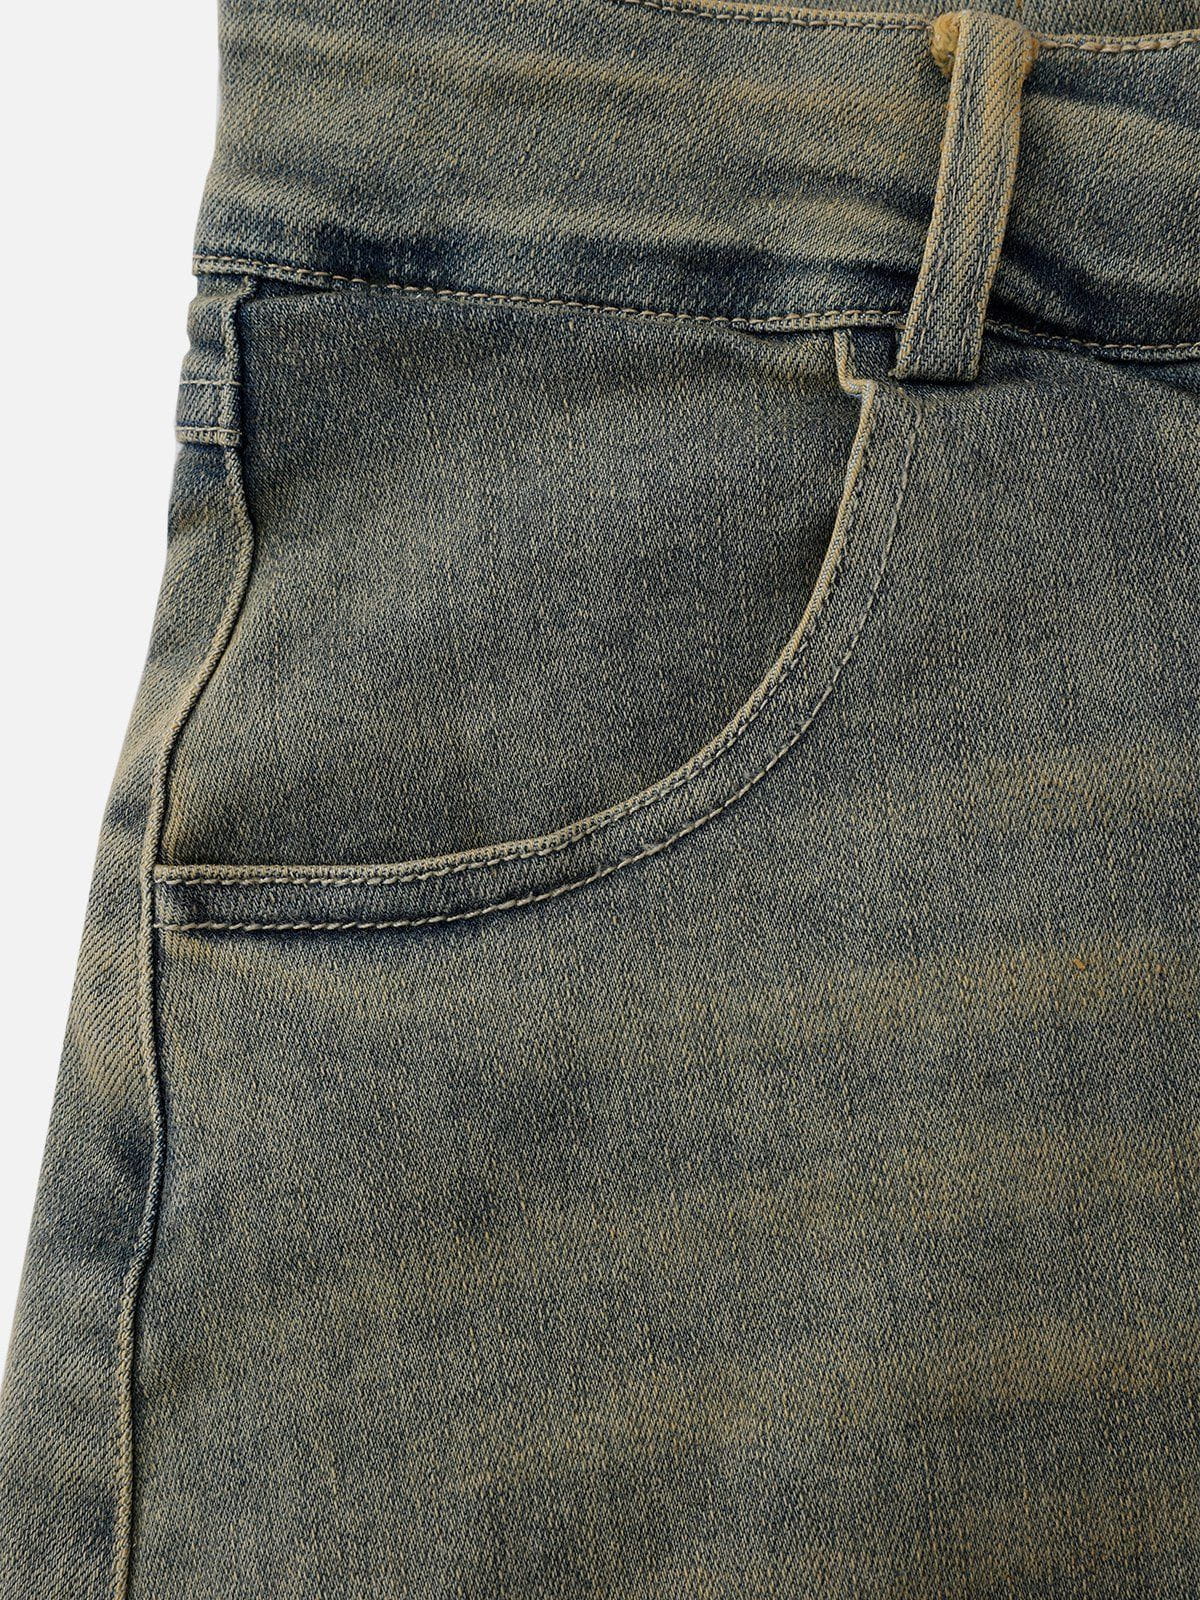 Aelfric Eden Fringe Distressed Washed Jeans